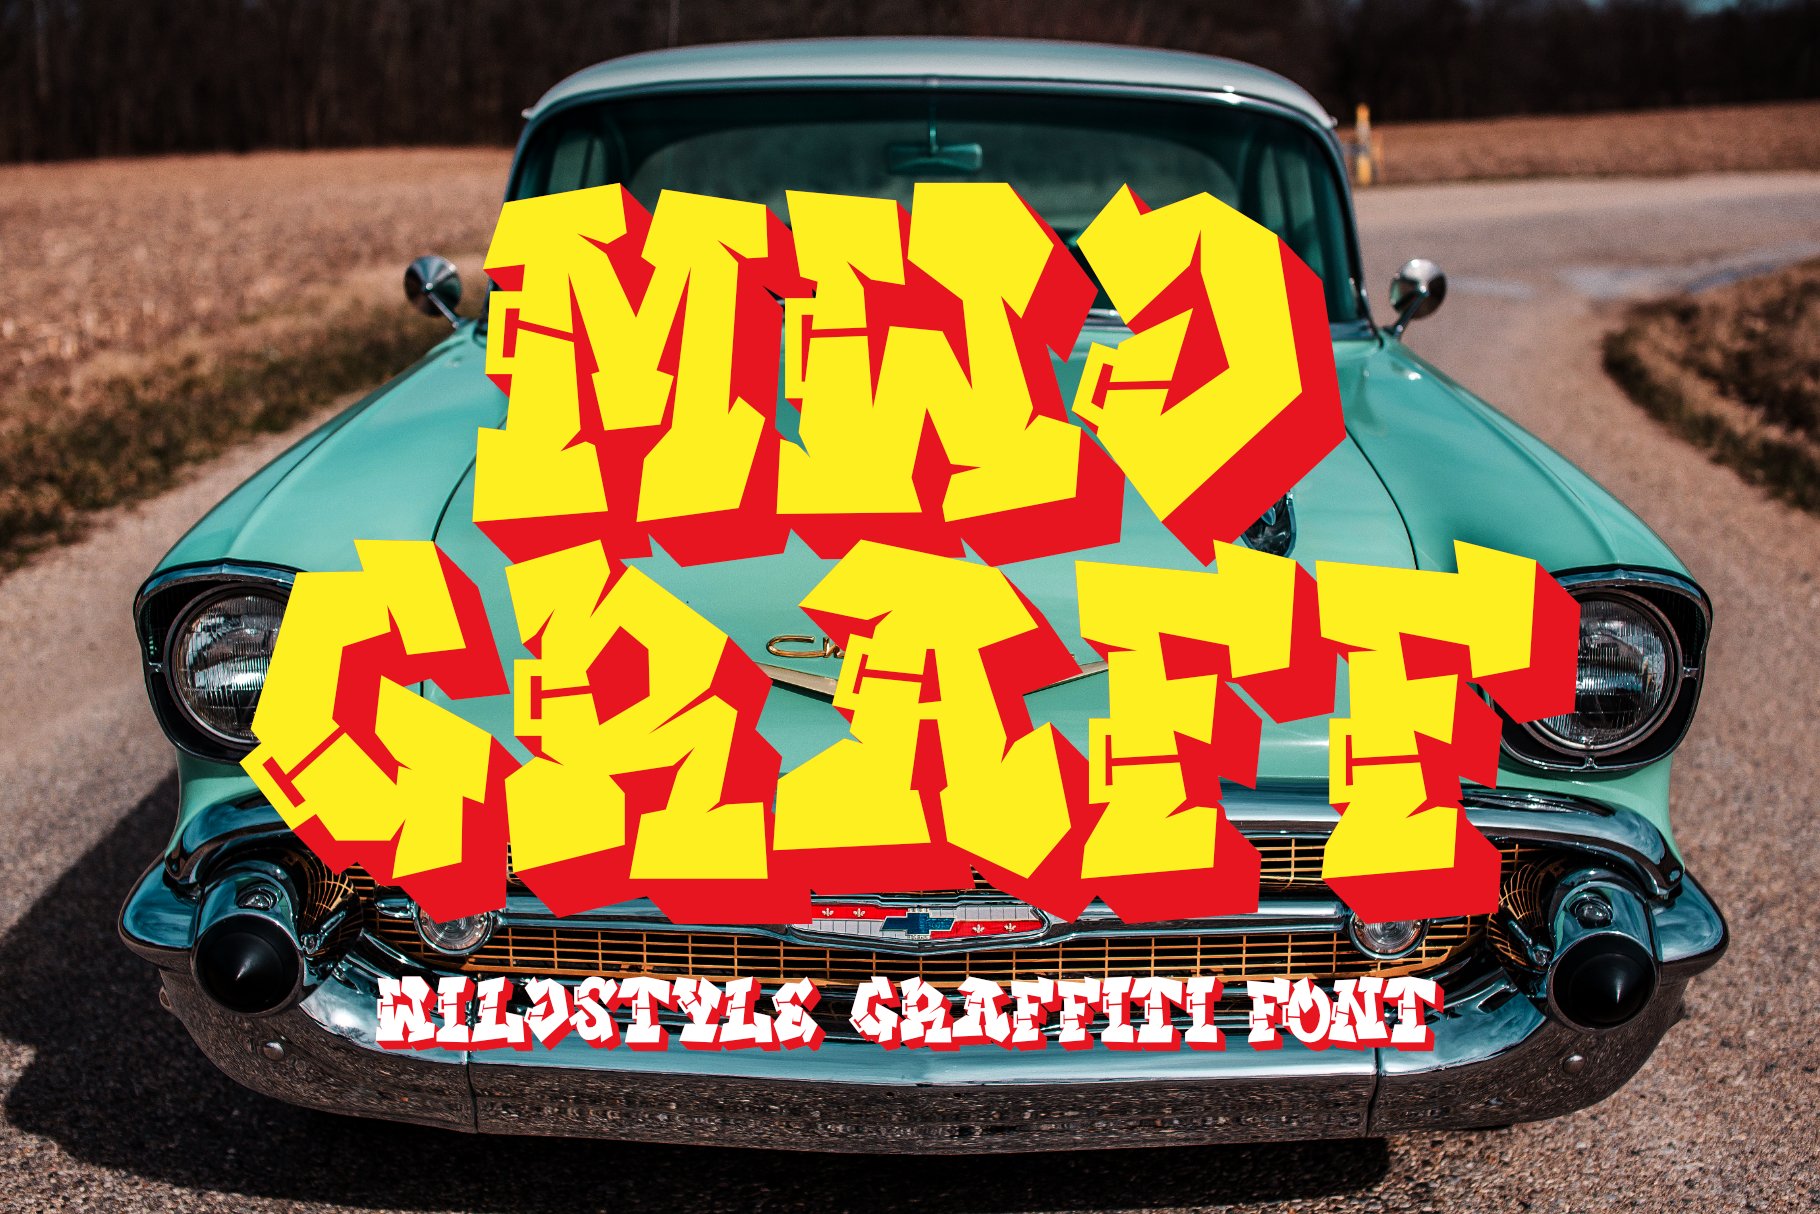 MWD Graff - Wildstyle Graffiti Font cover image.